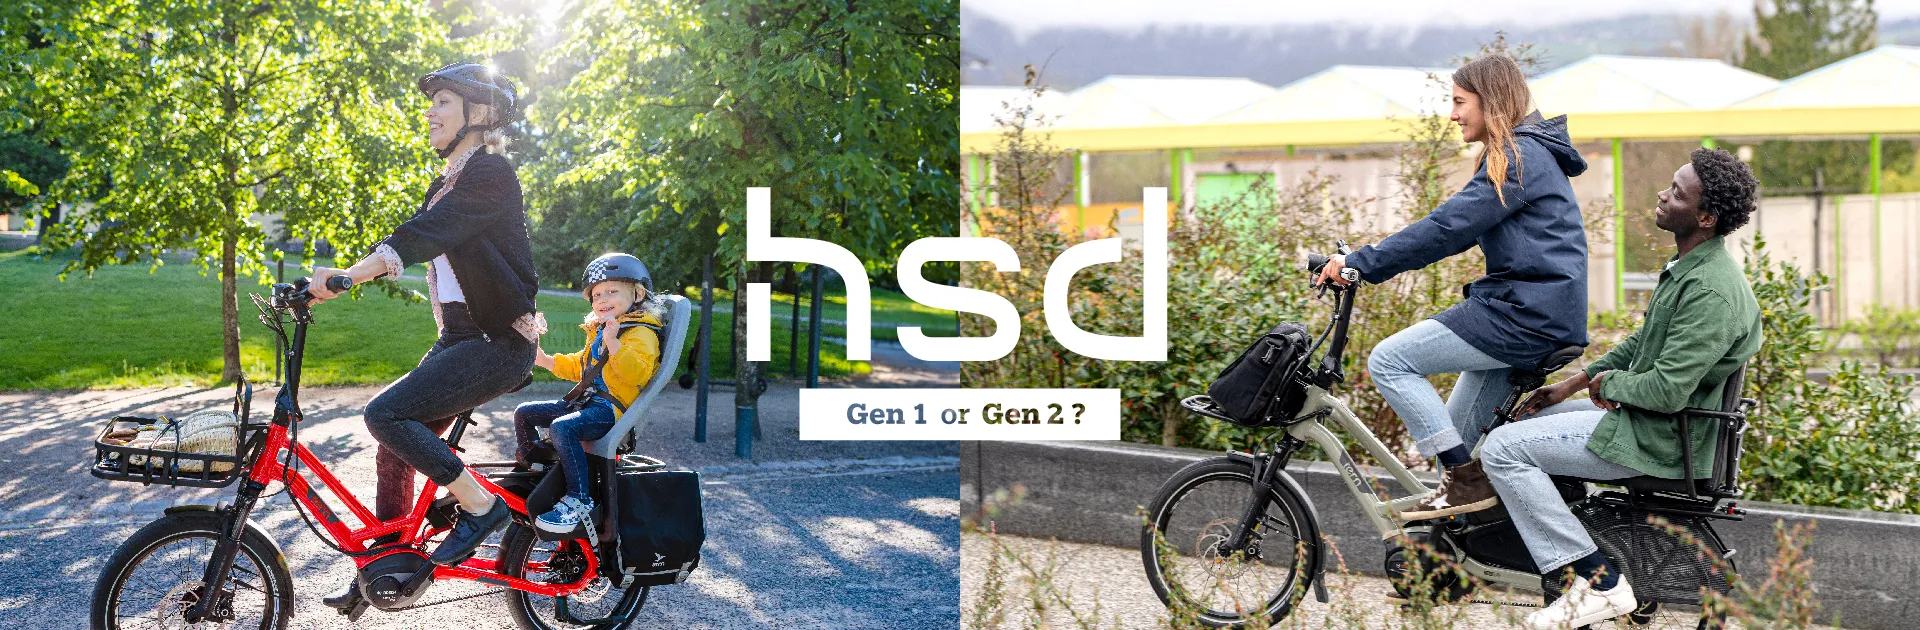 HSD Gen 1 vs Gen 2 banner